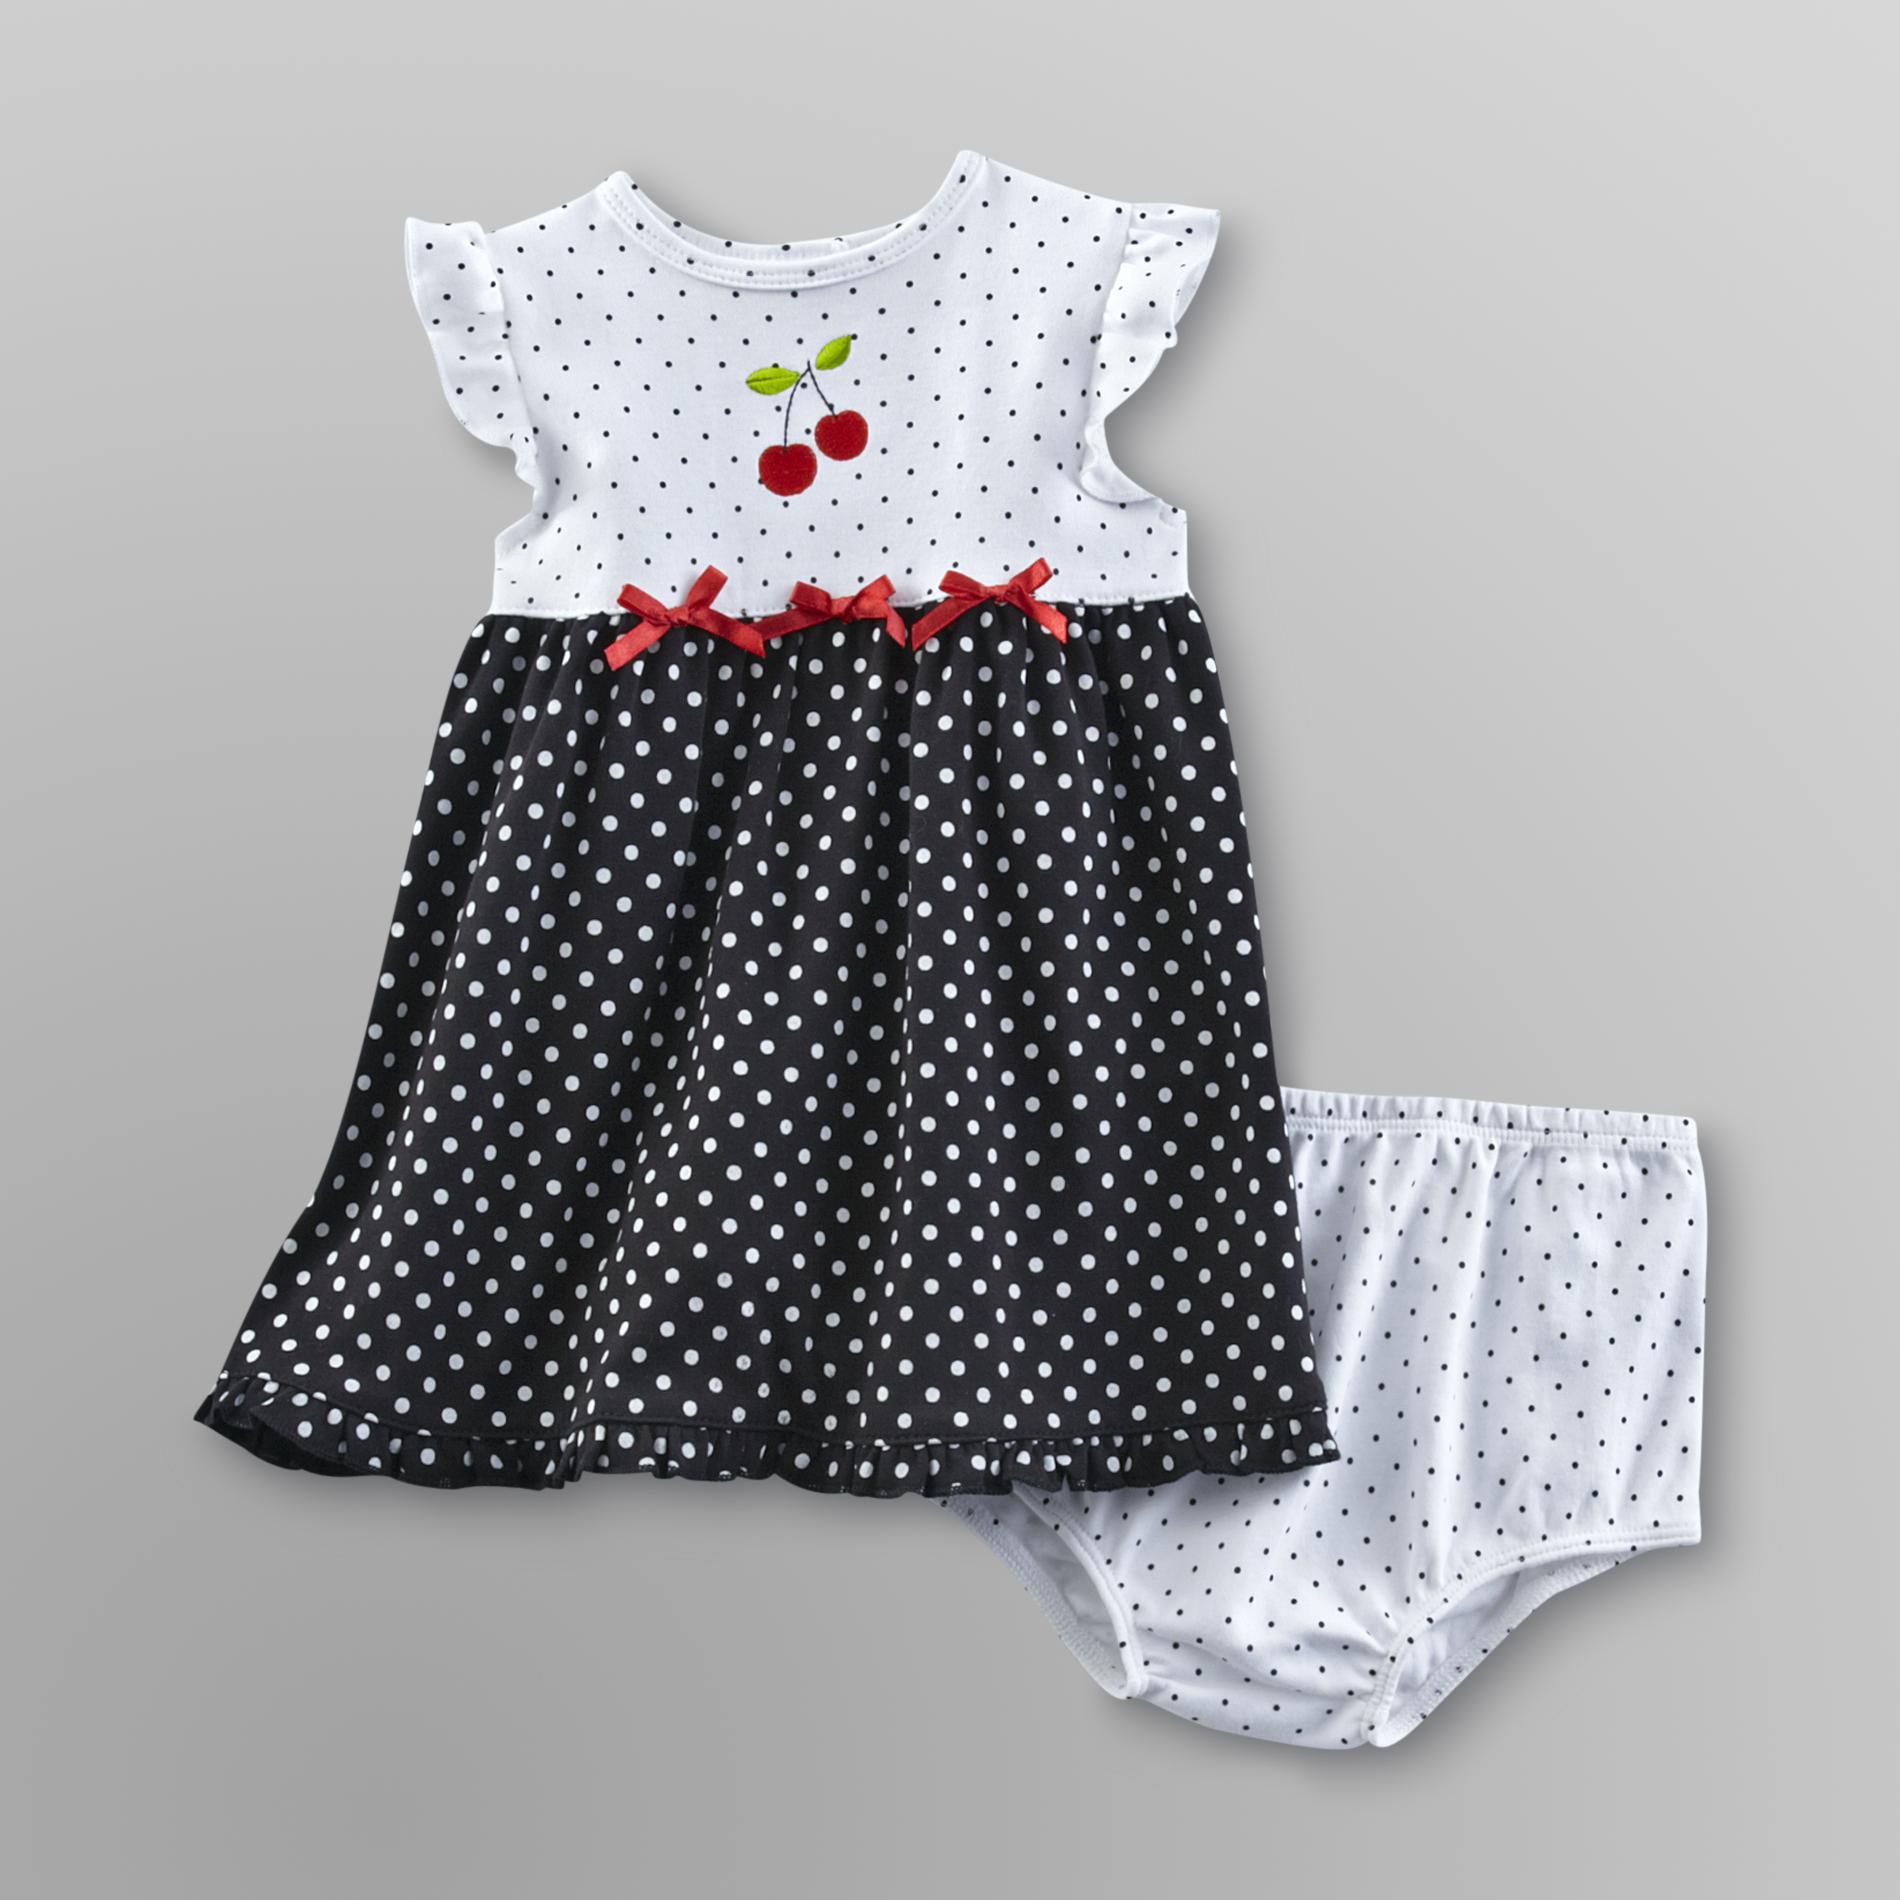 Welcome to the World Infant Girl's Polka Dot Dress - Cherries